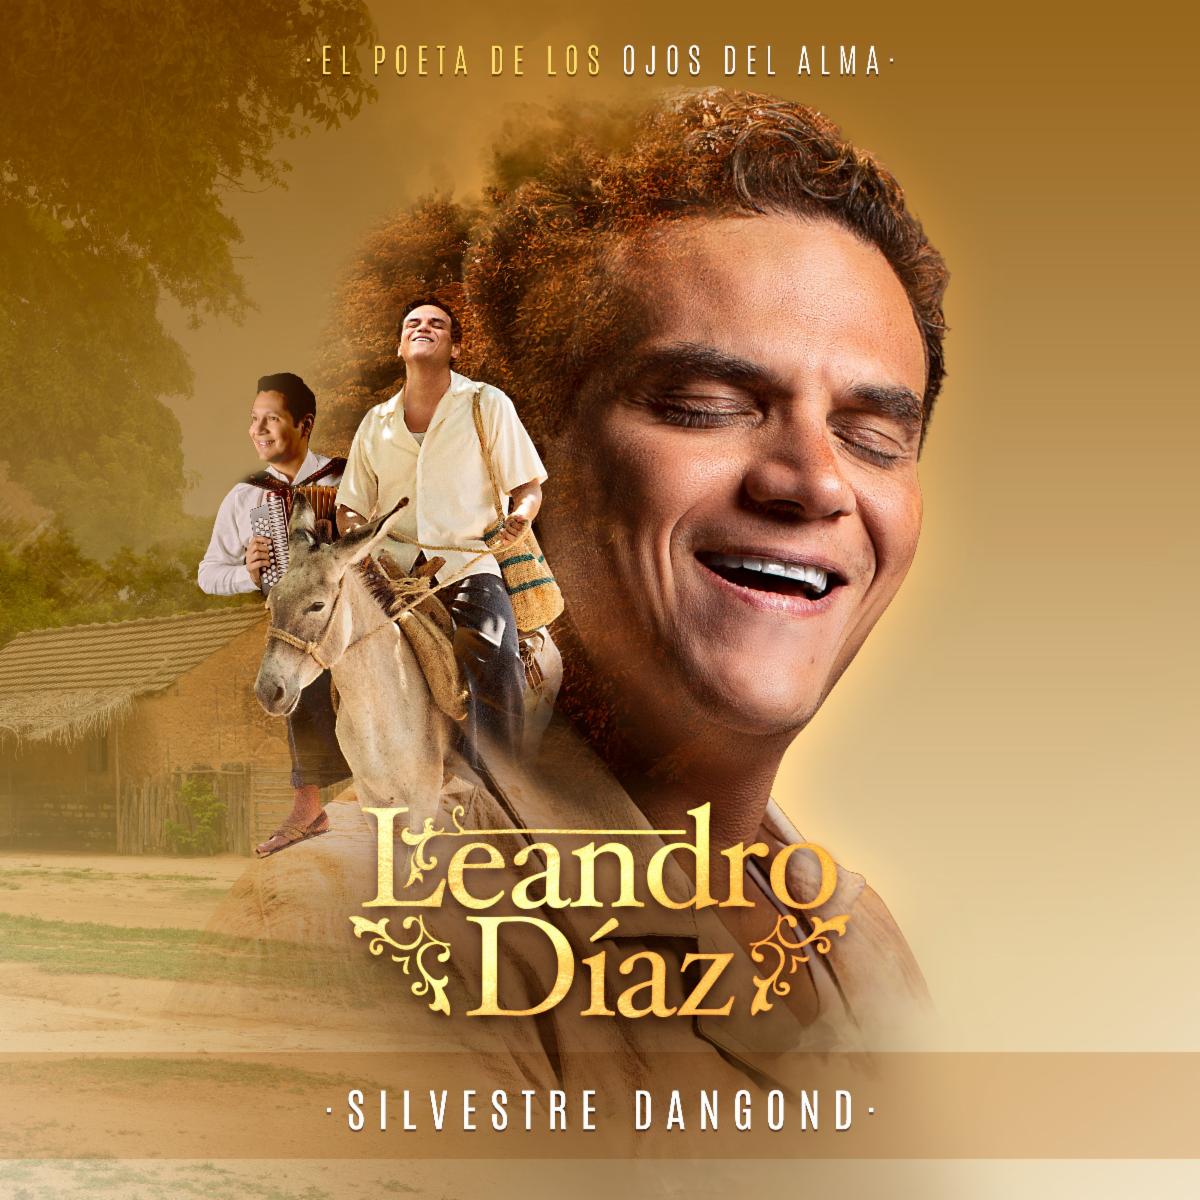 SILVESTRE DANGOND lanza nuevo álbum “Leandro Díaz”